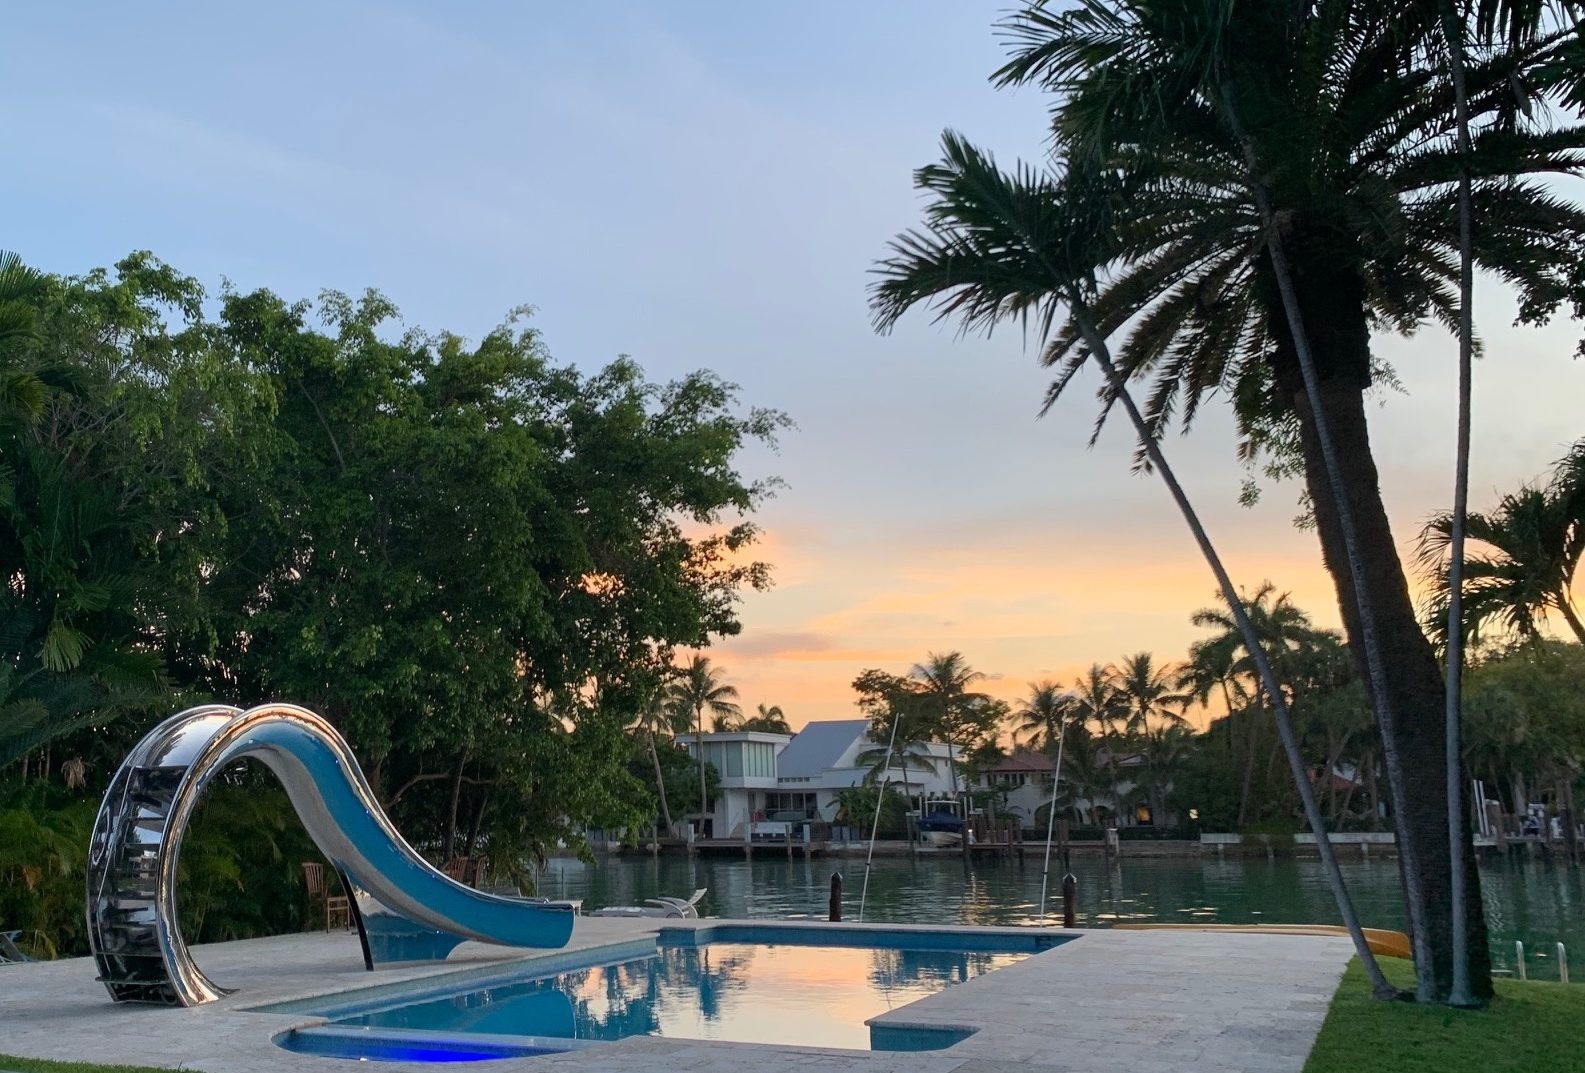 Splinterworks luxury pool slide Miami Florida